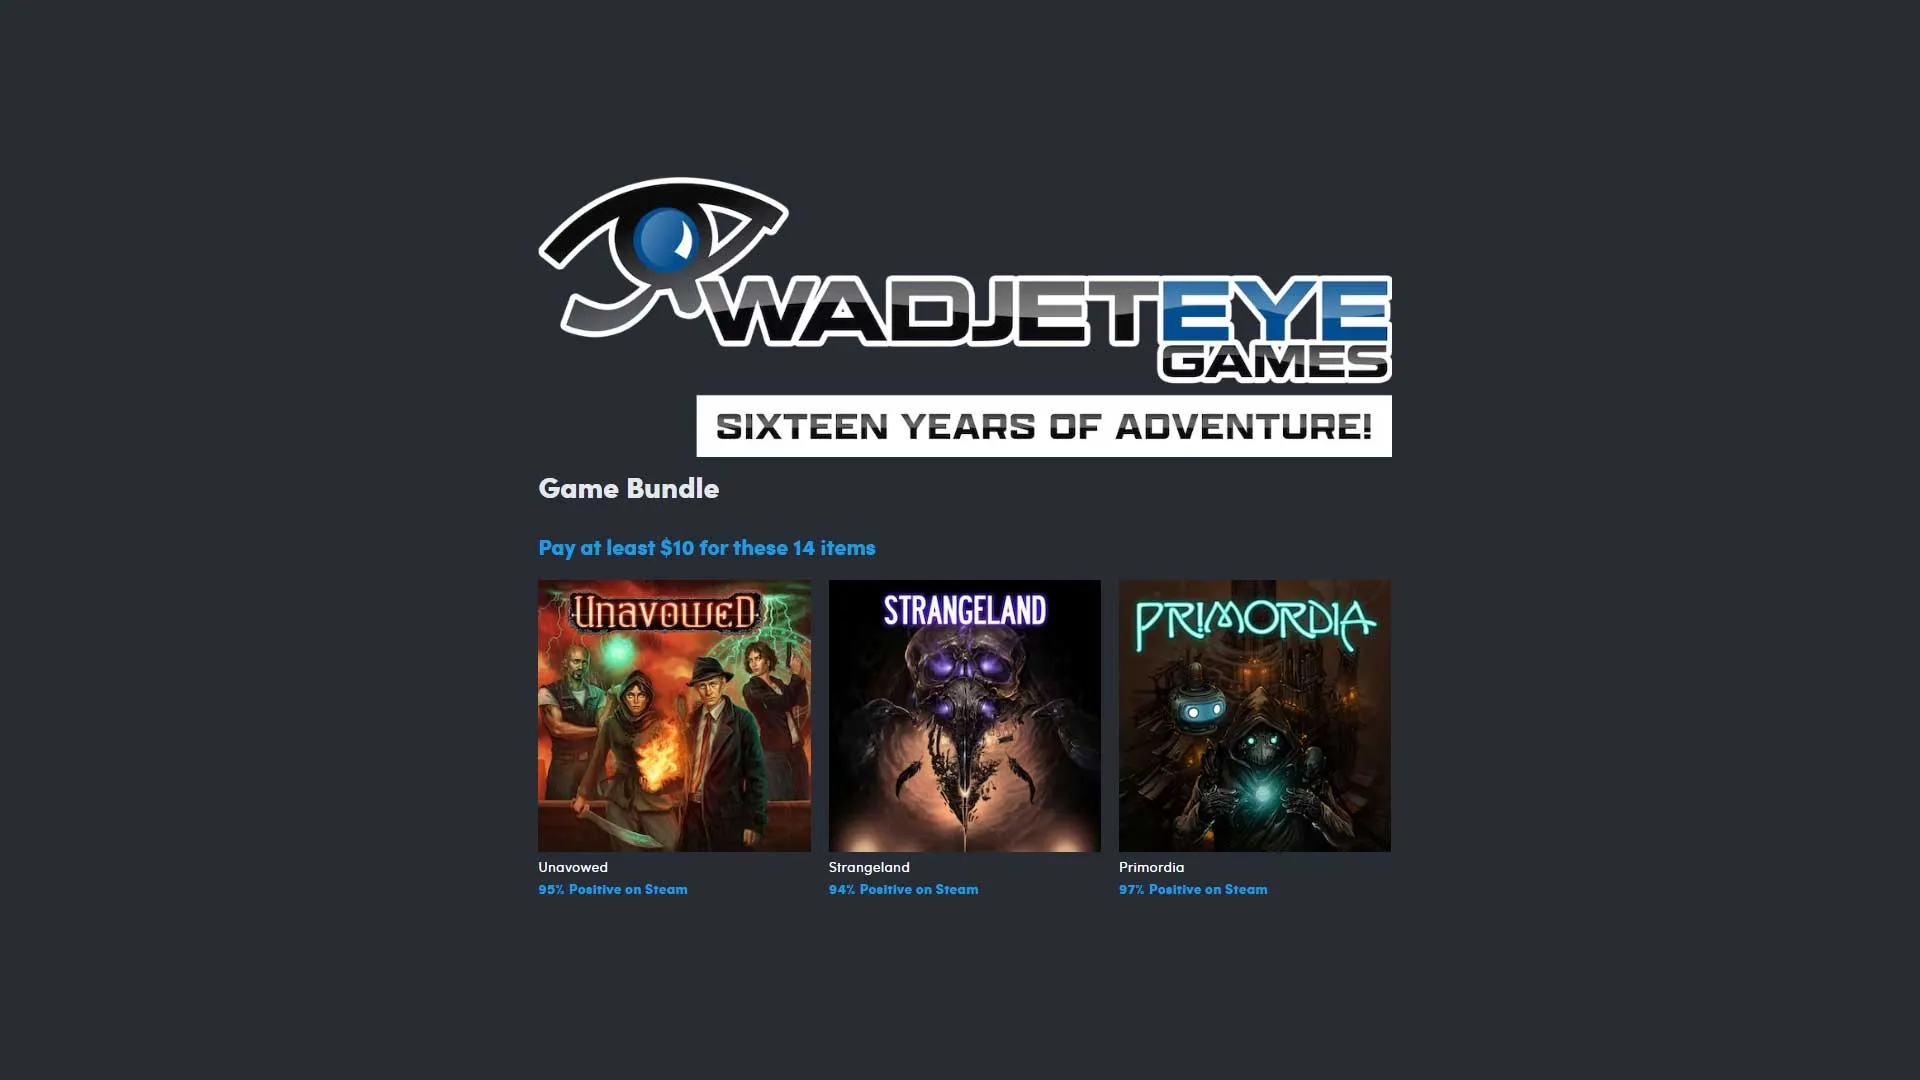 Humble Wadjet Eye Games Bundle packs 13 adventure games for $10